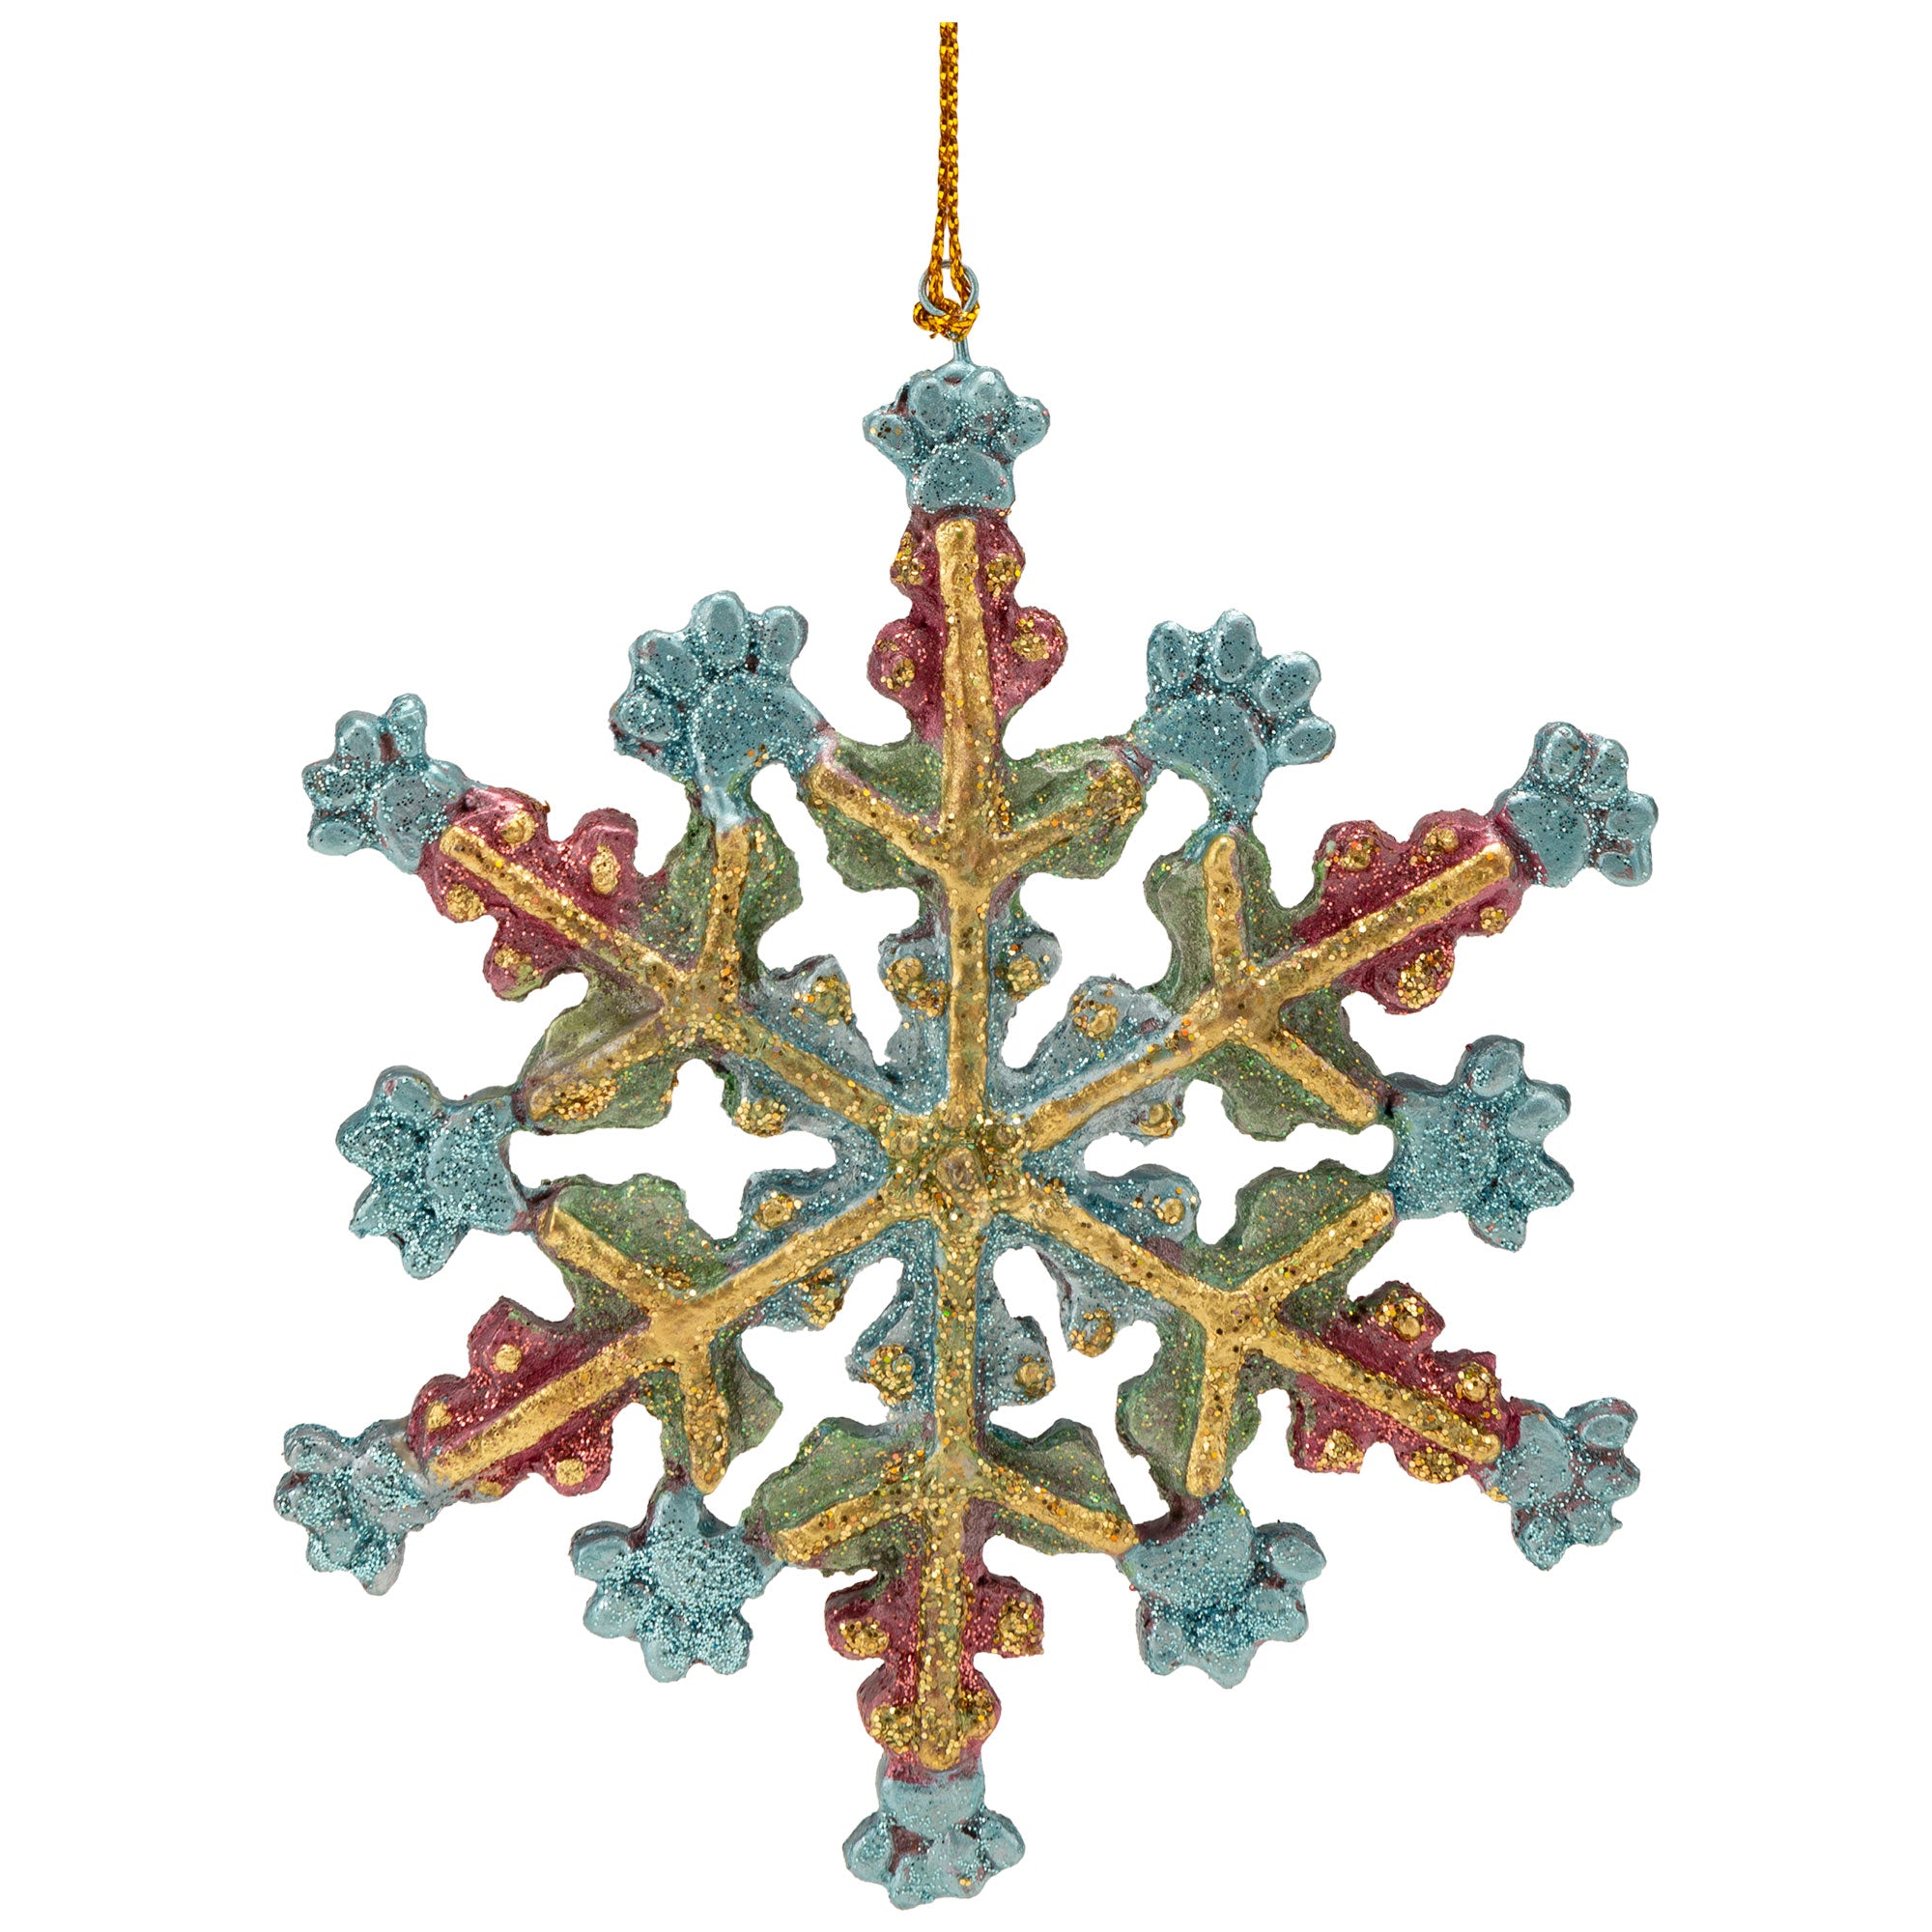 Glitter Paw Print Snowflake Ornament - Multi